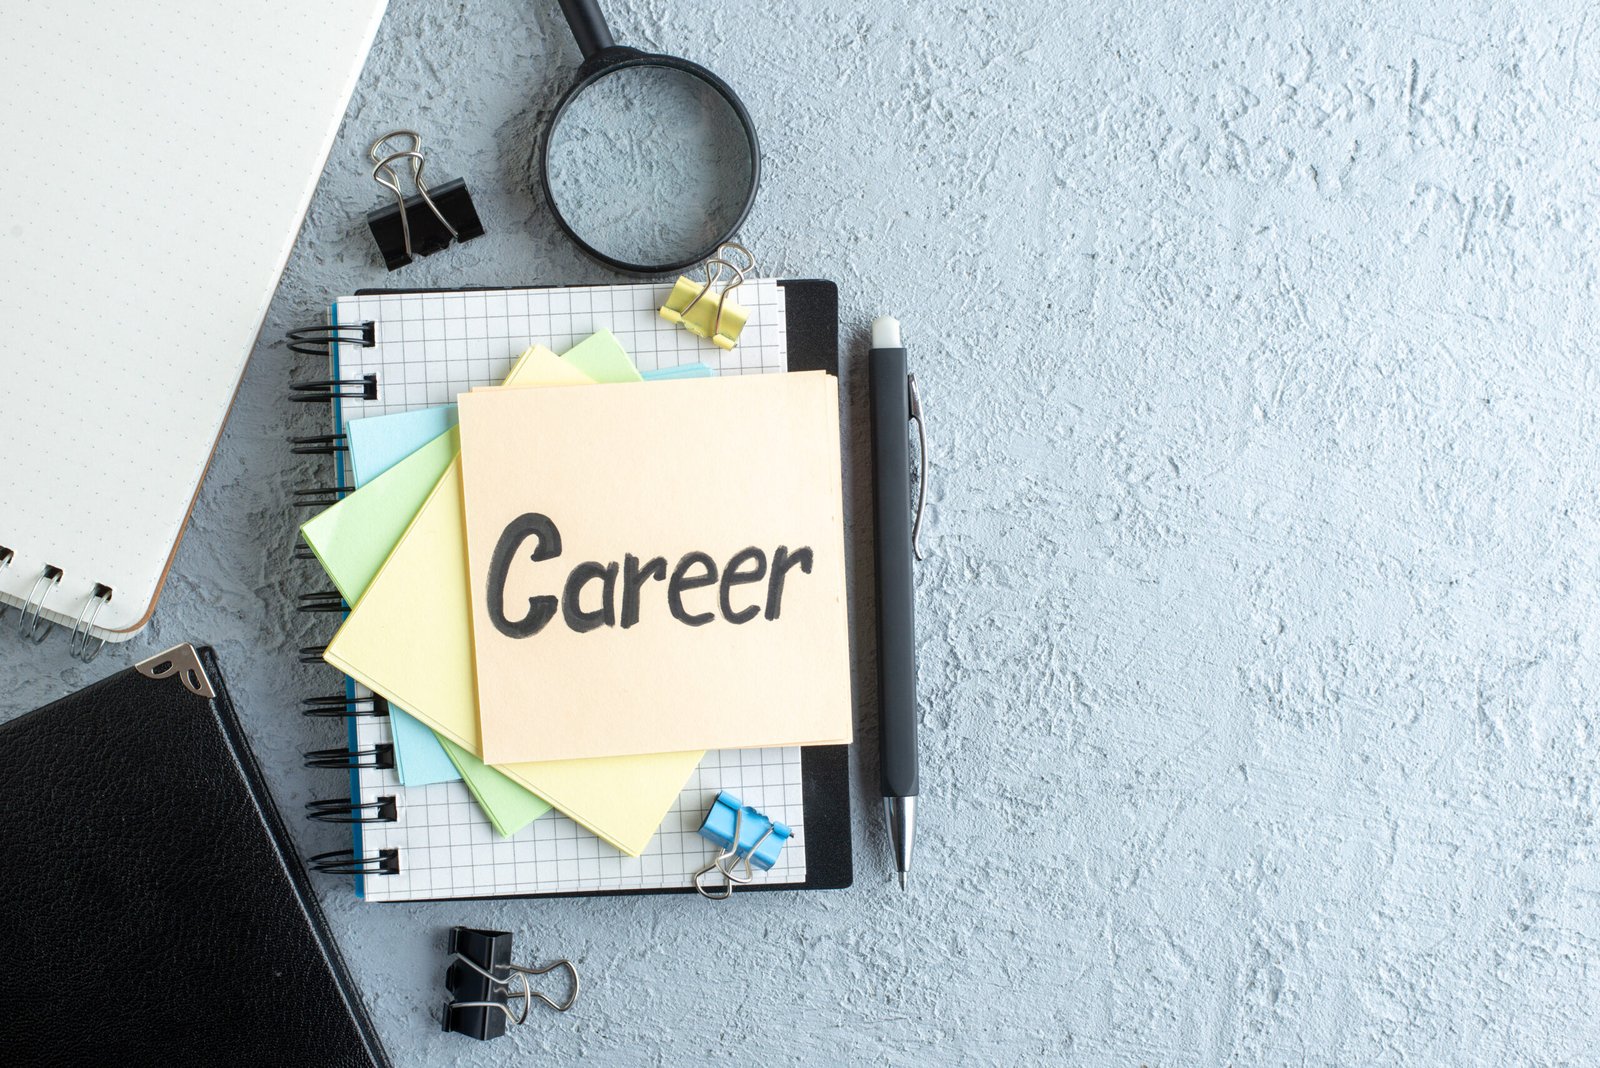 Navigating Career Transitions